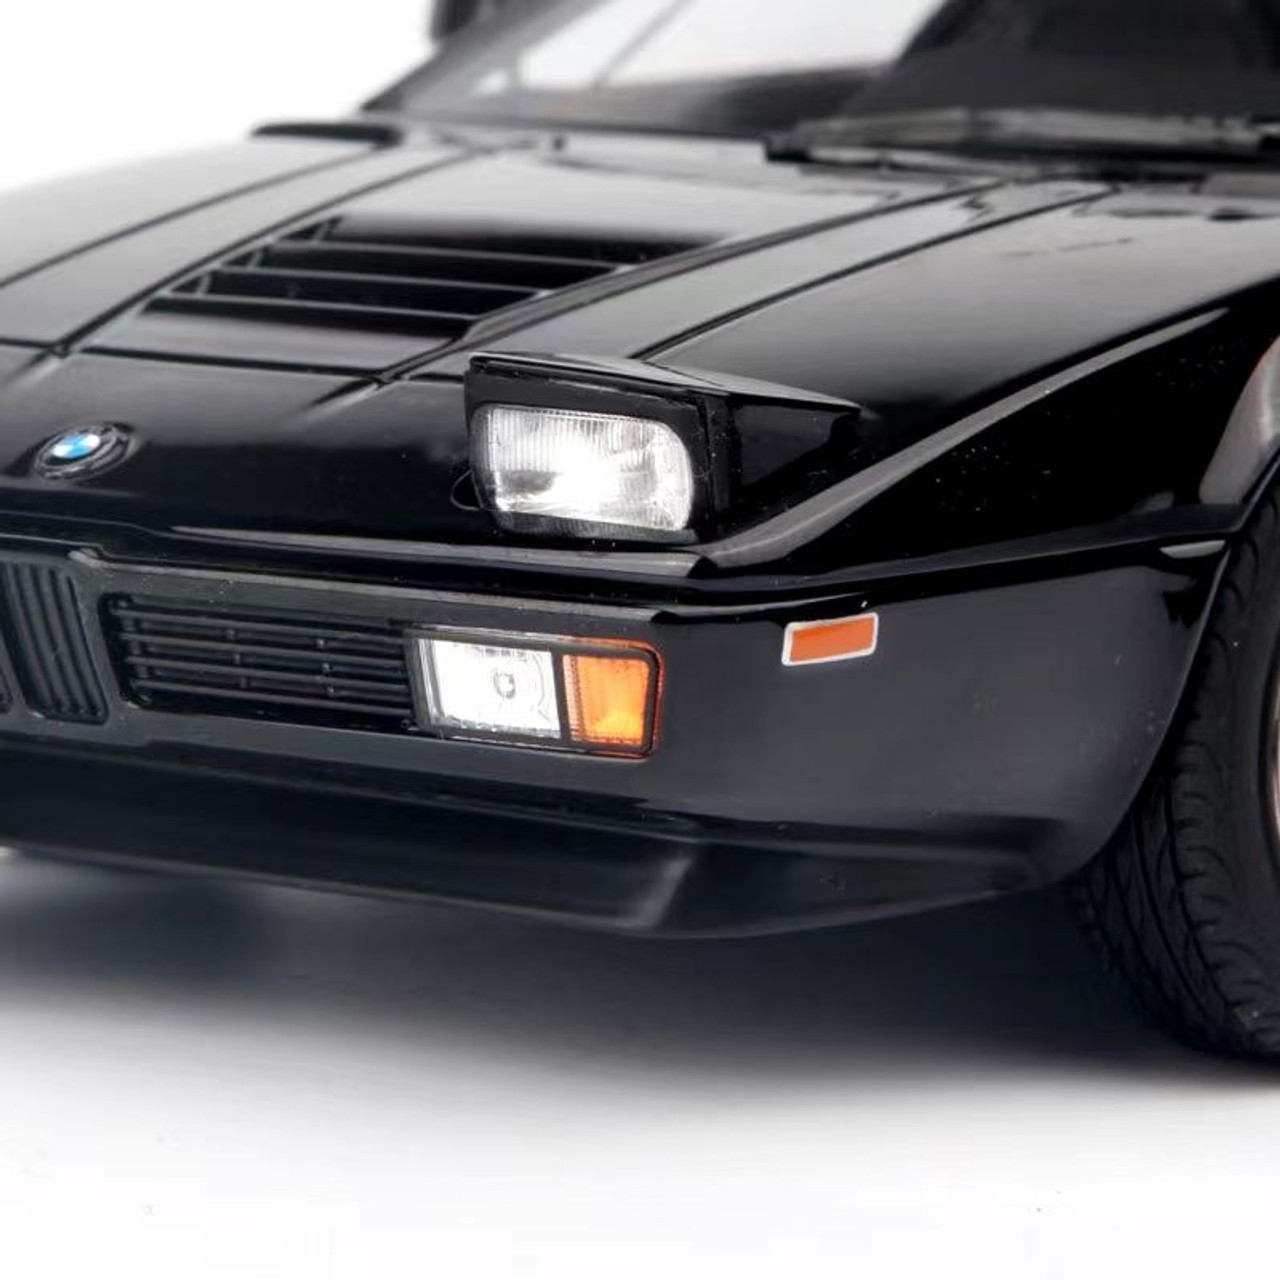 1/18 Norev BMW M1 (Black) Diecast Car Model